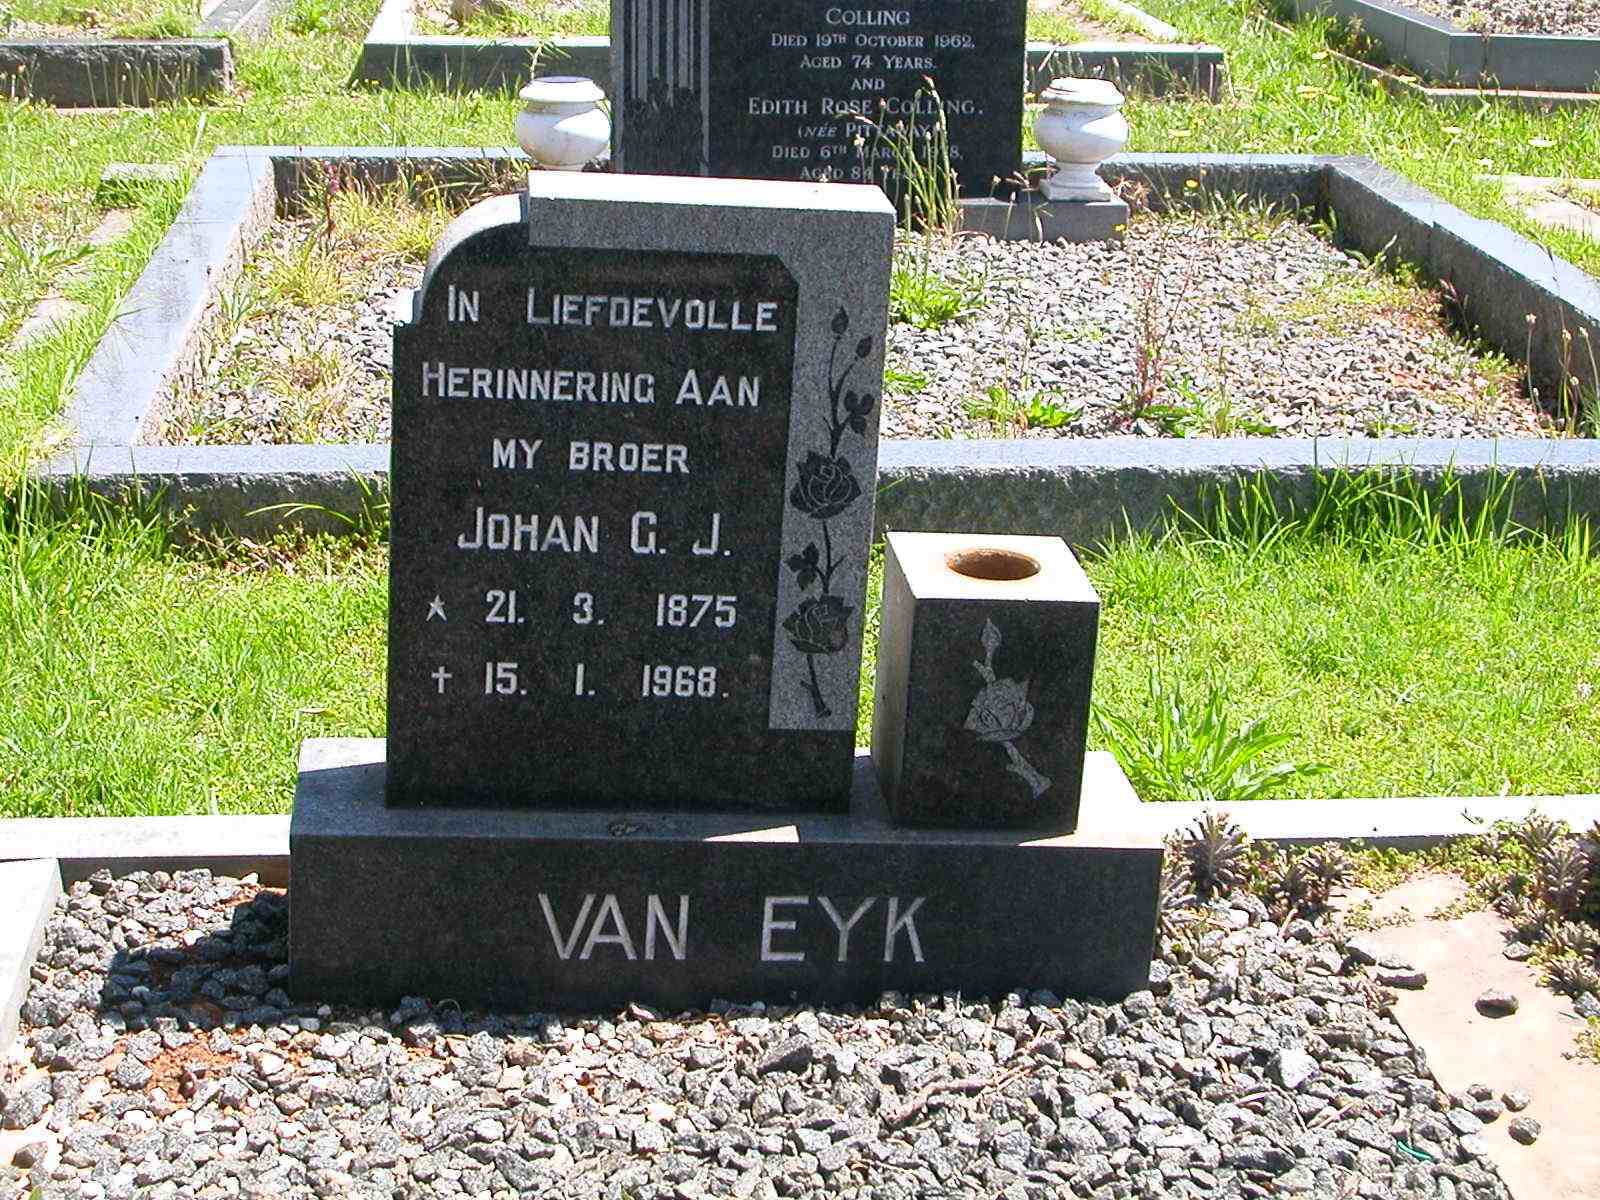 EYK Johan G.J., van 1875-1968